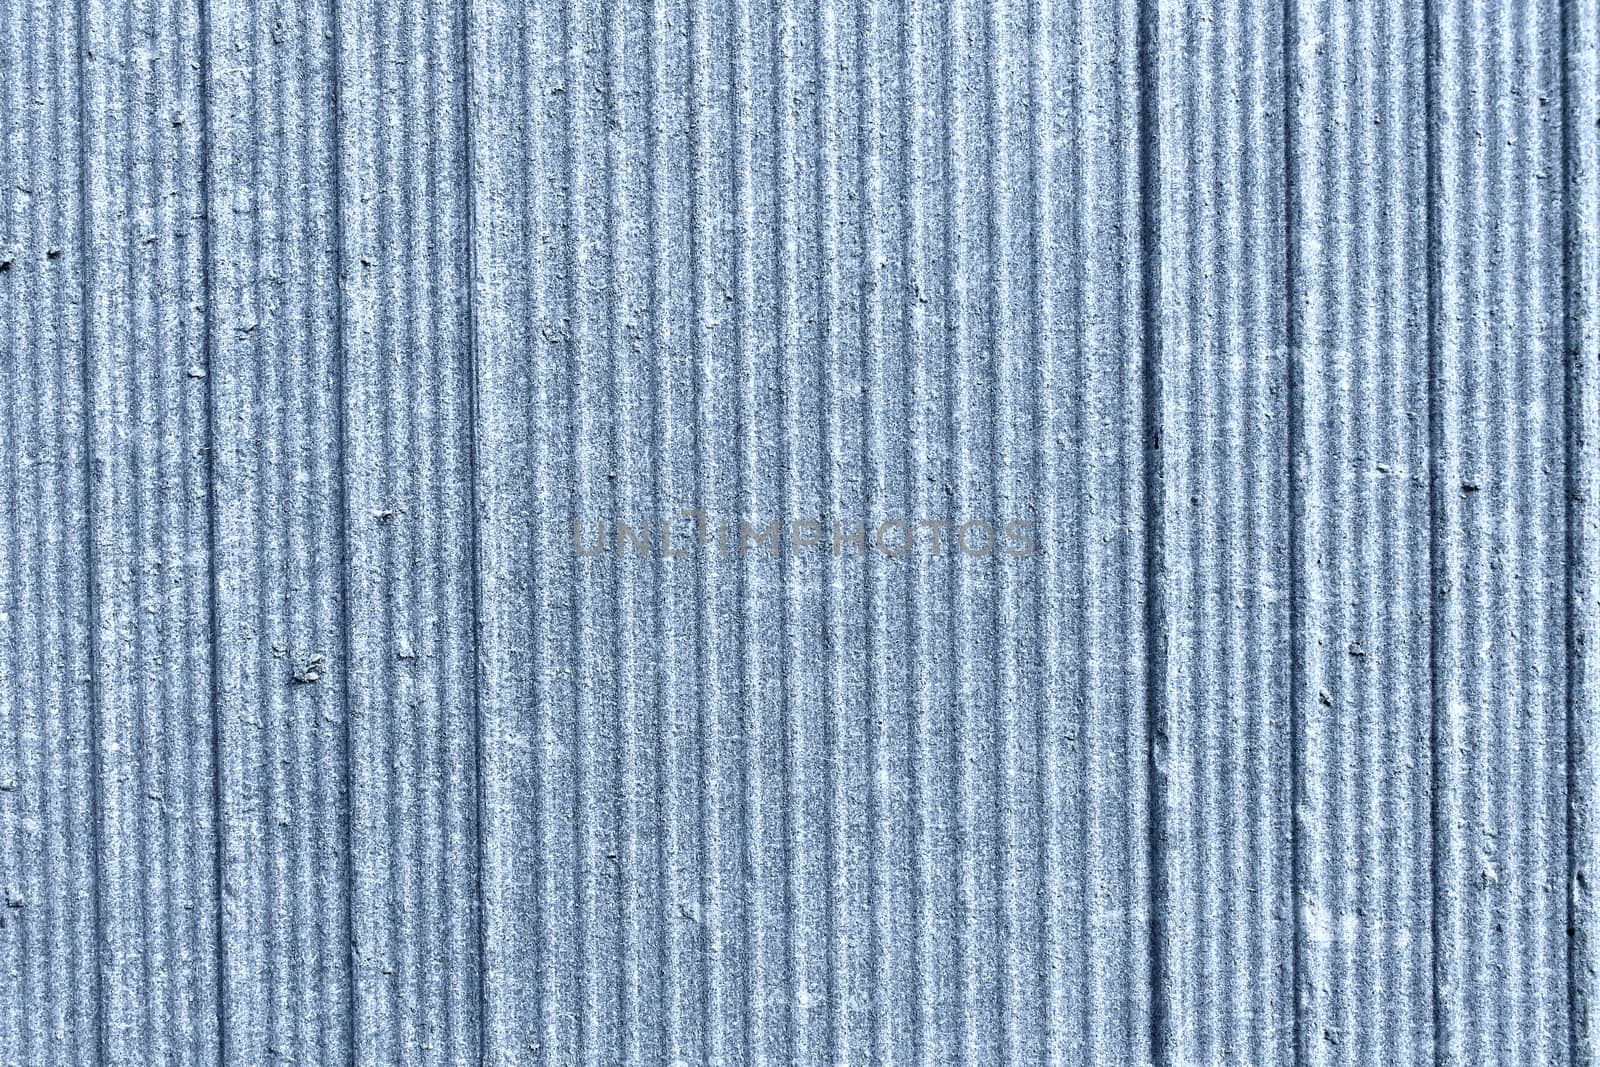 gray horizontal stripes background material shyfer plan by Ukid123